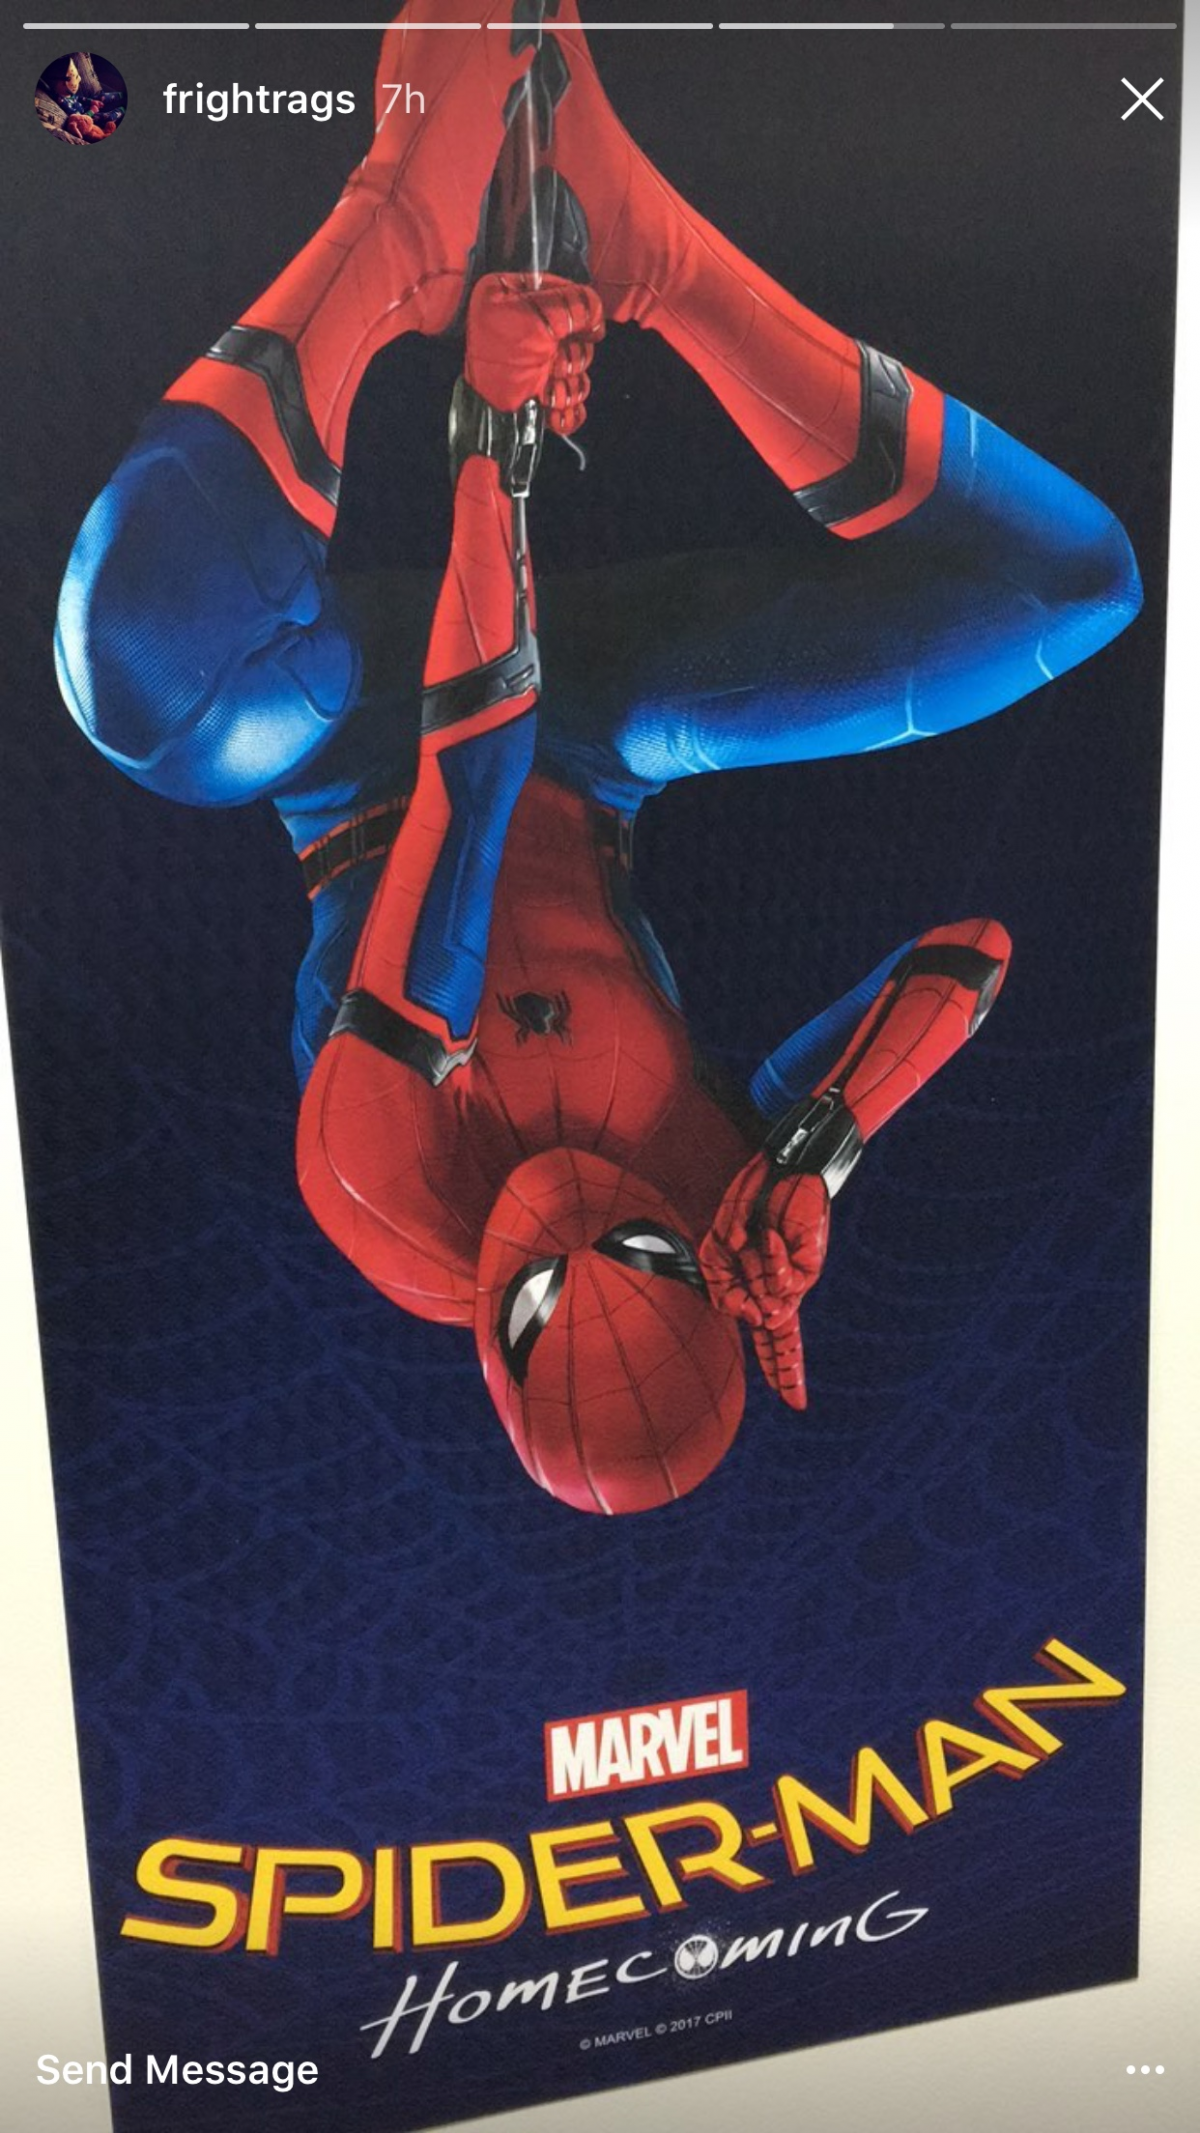 Download Upside Down Spider-Man Marvel iPhone XR Wallpaper | Wallpapers.com